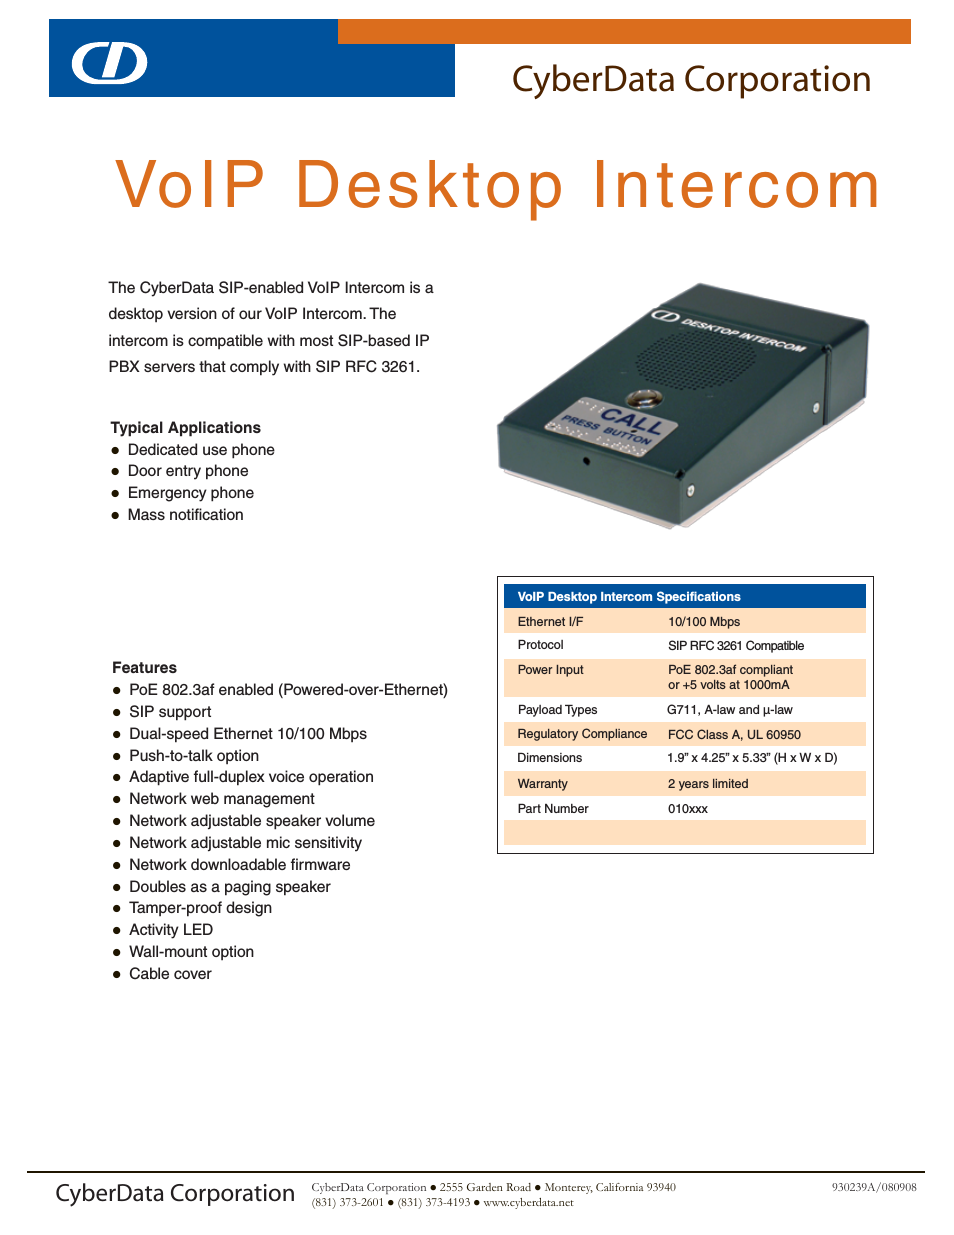 VoIP Desktop Intercom